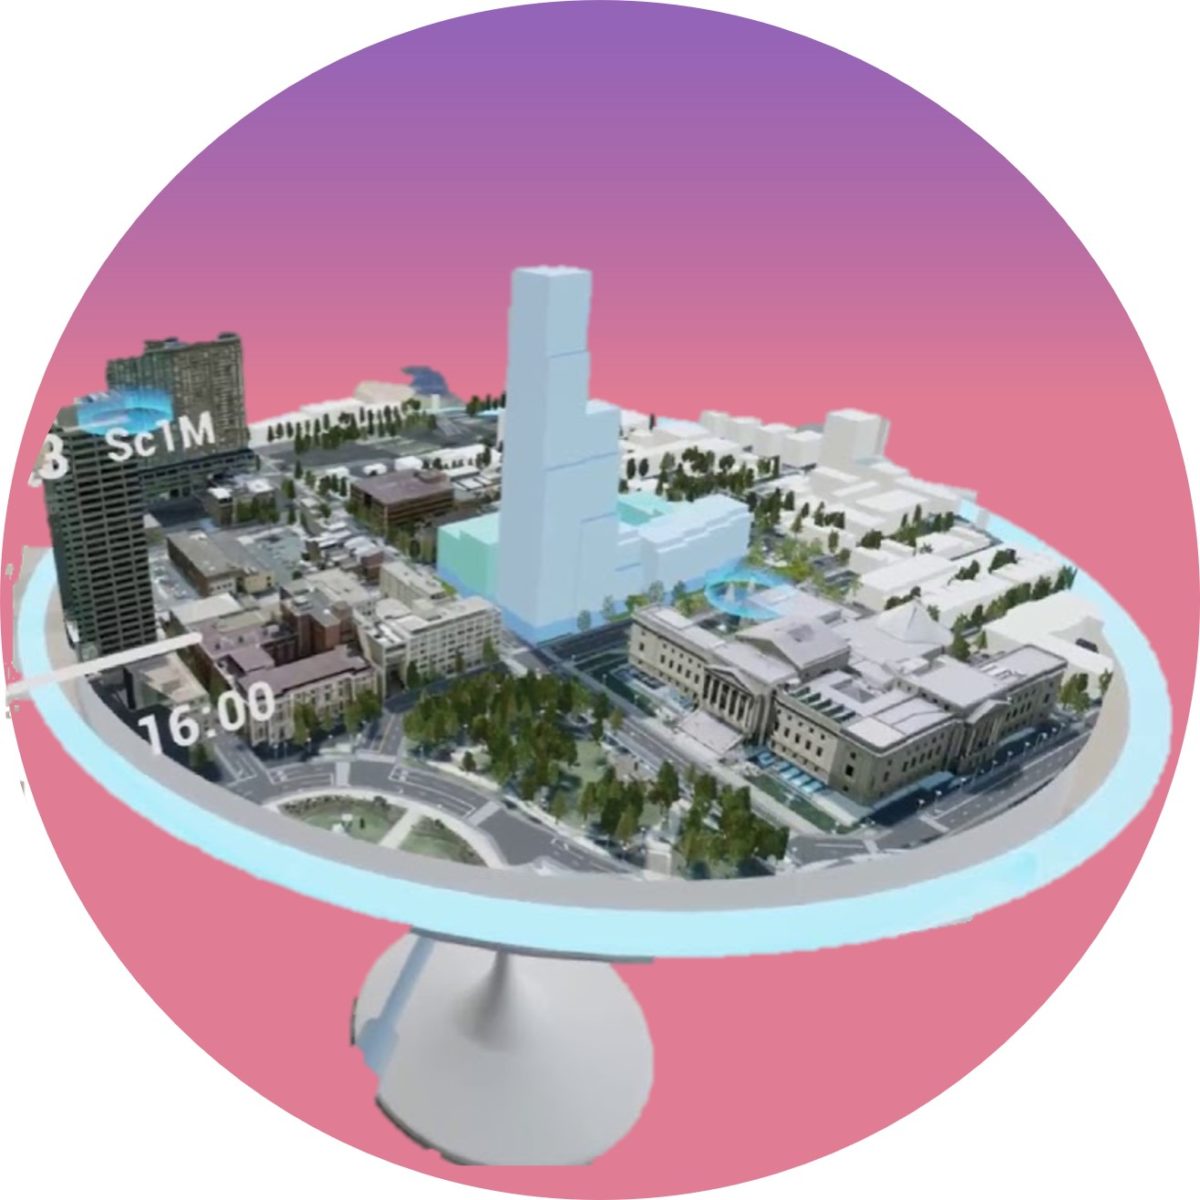 Virtual Reality Housing Innovation Collaborative